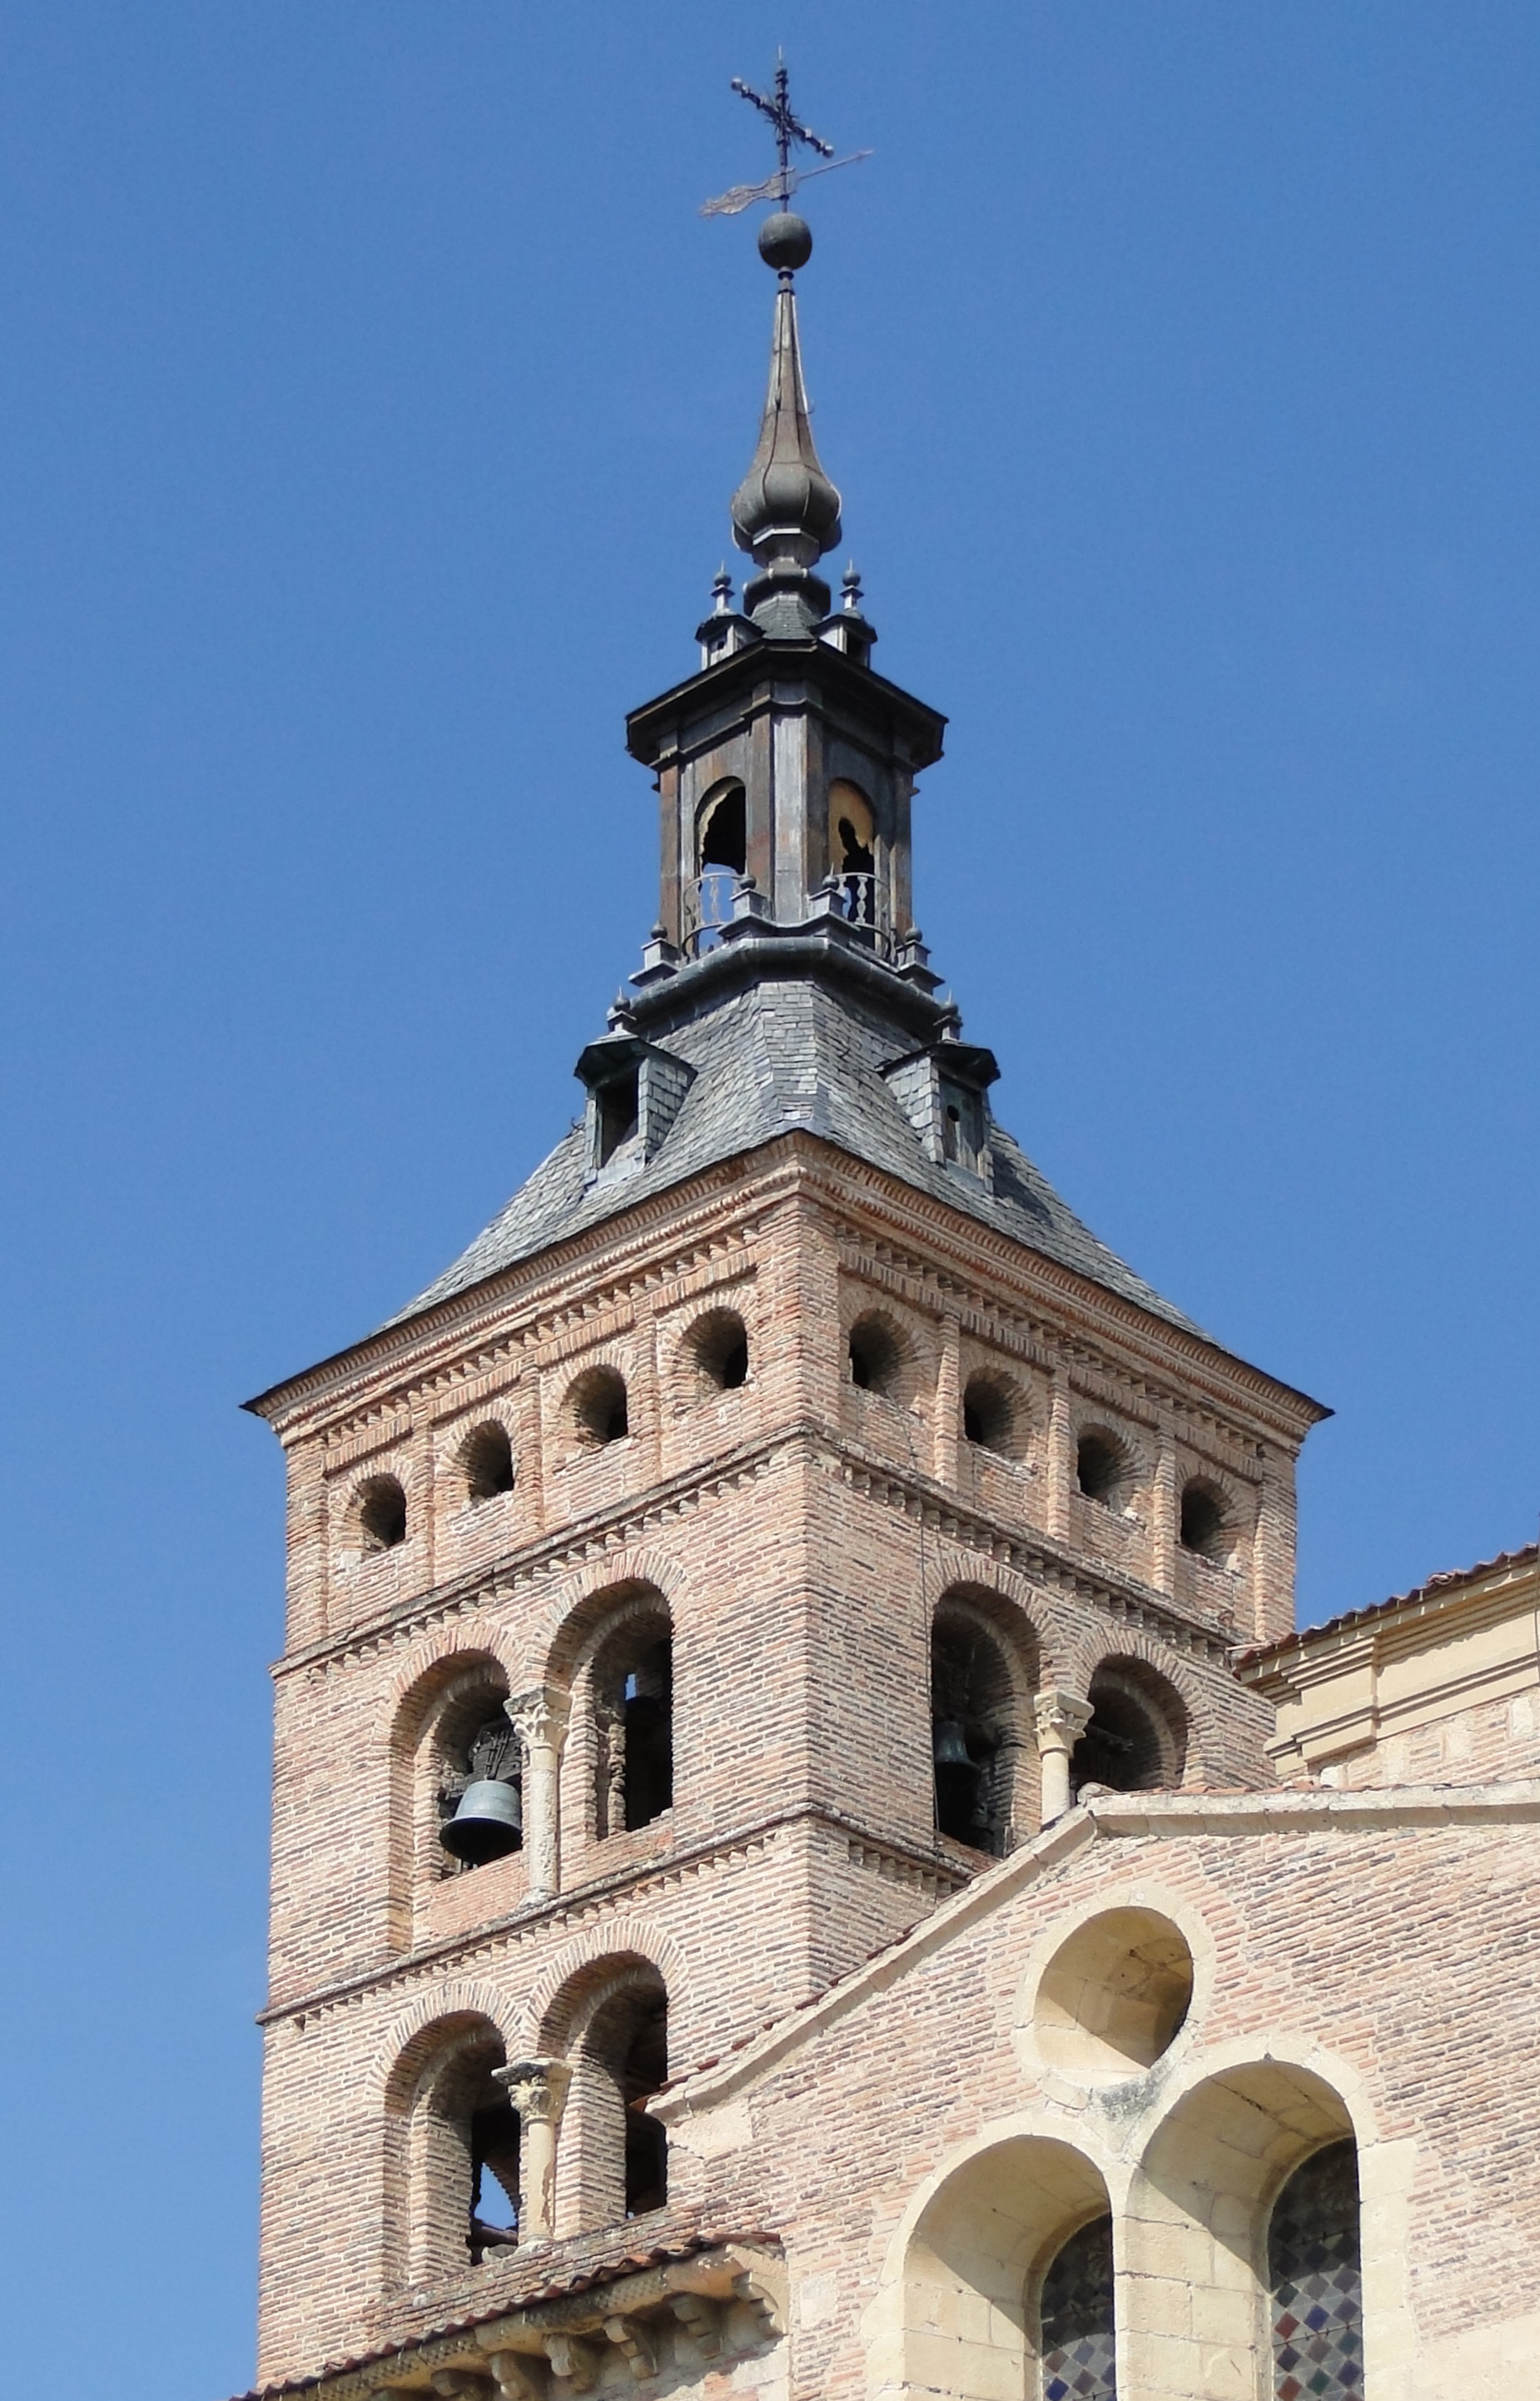 Bell tower of Church of San Martín, Segovia